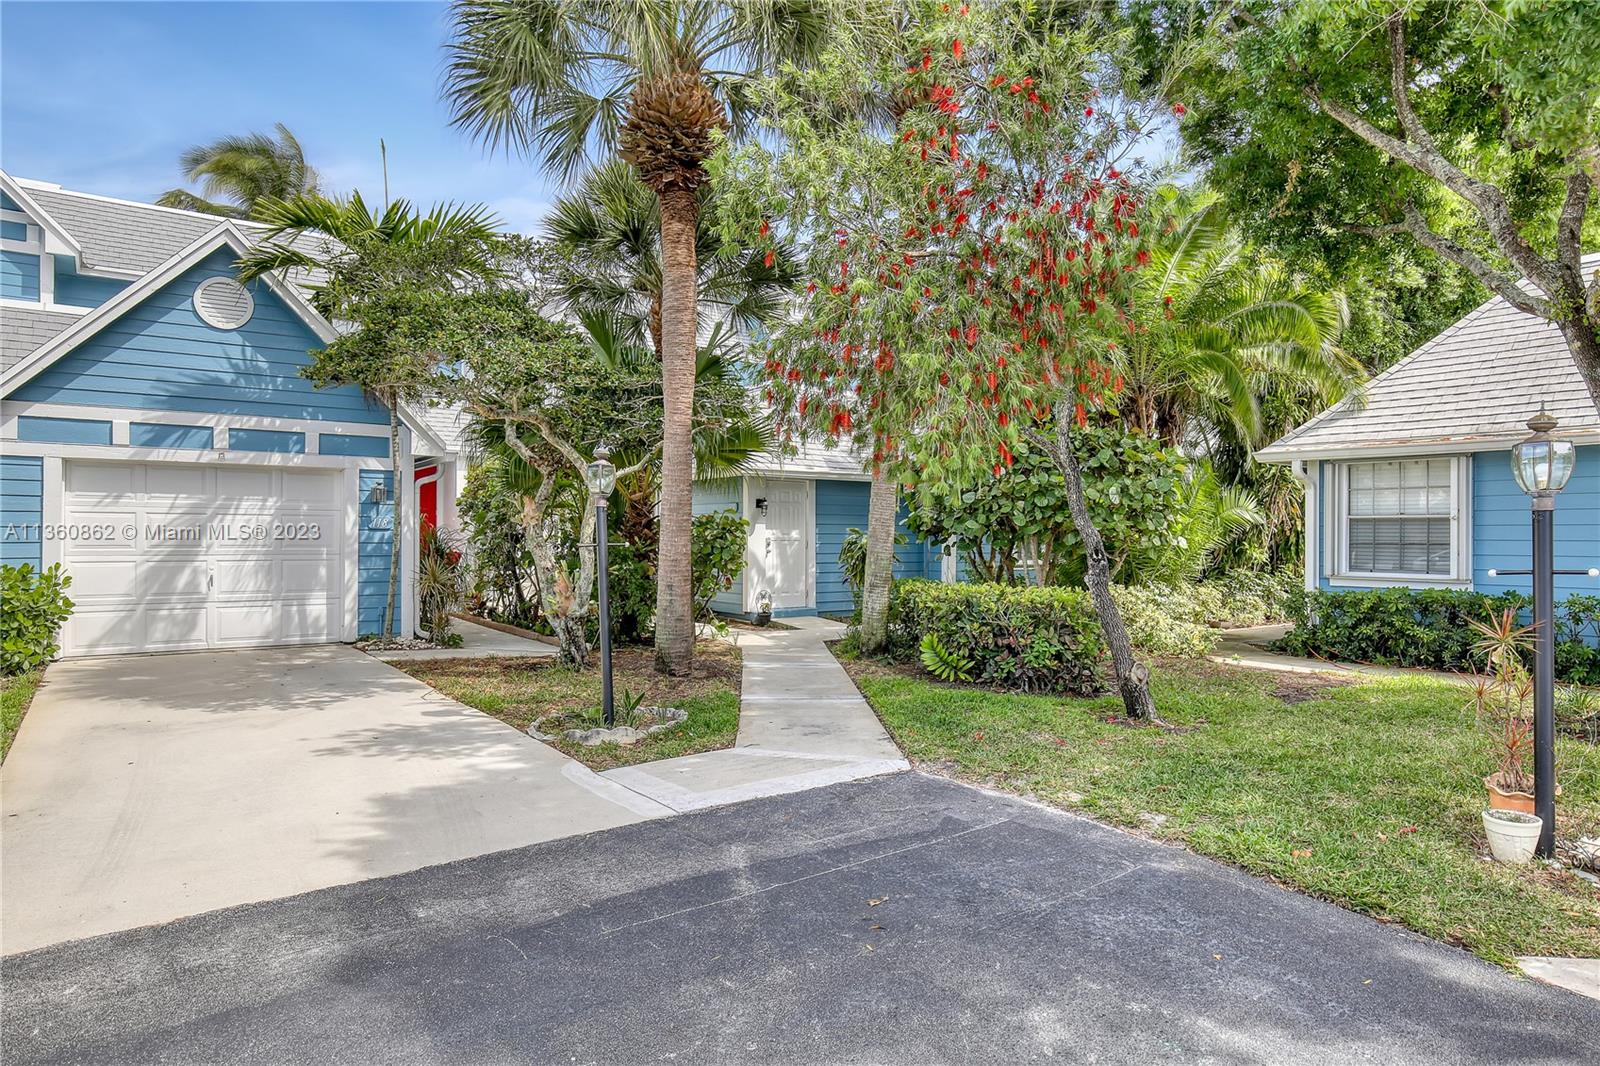 Rental Property at 119 Ocean Dunes Cir Cir, Jupiter, Palm Beach County, Florida - Bedrooms: 2 
Bathrooms: 3  - $6,000 MO.